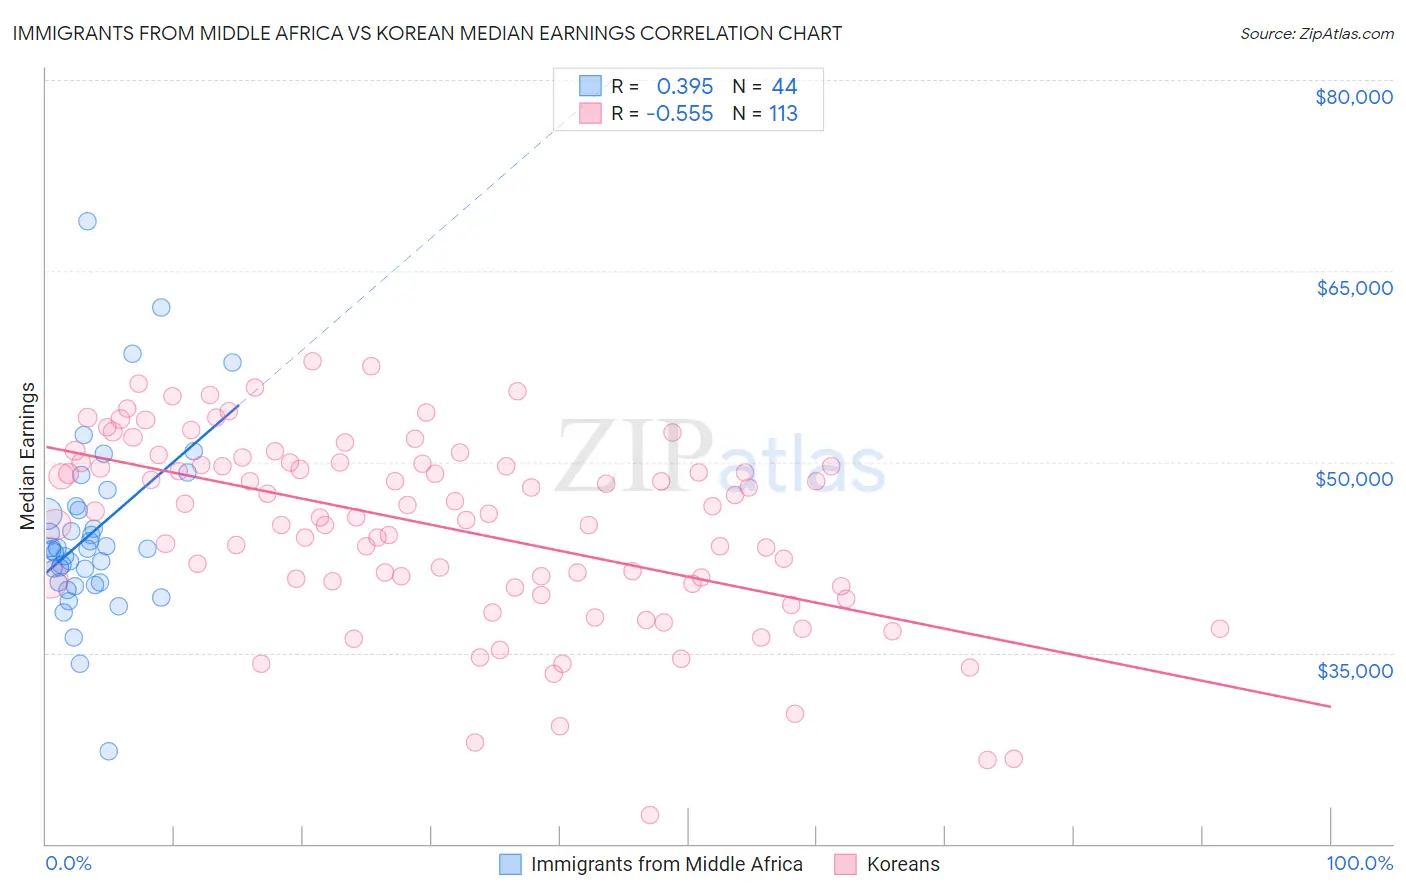 Immigrants from Middle Africa vs Korean Median Earnings